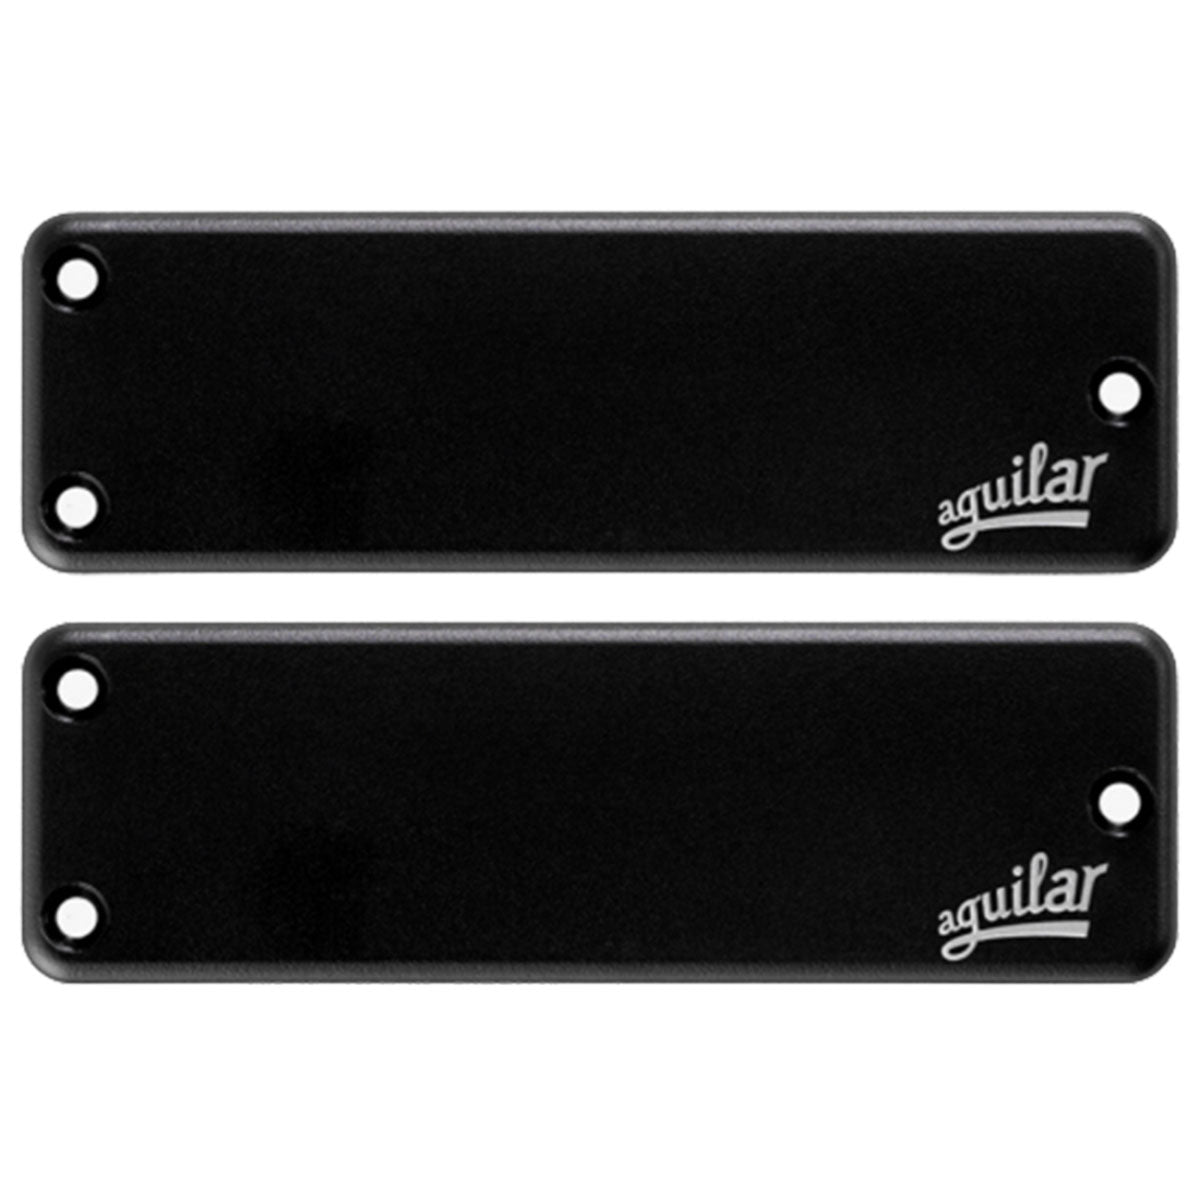 Aguilar Bass Guitar Pickups DCB 4-String Set Featuring Dual Ceramic Bar Magnets, D1 Size